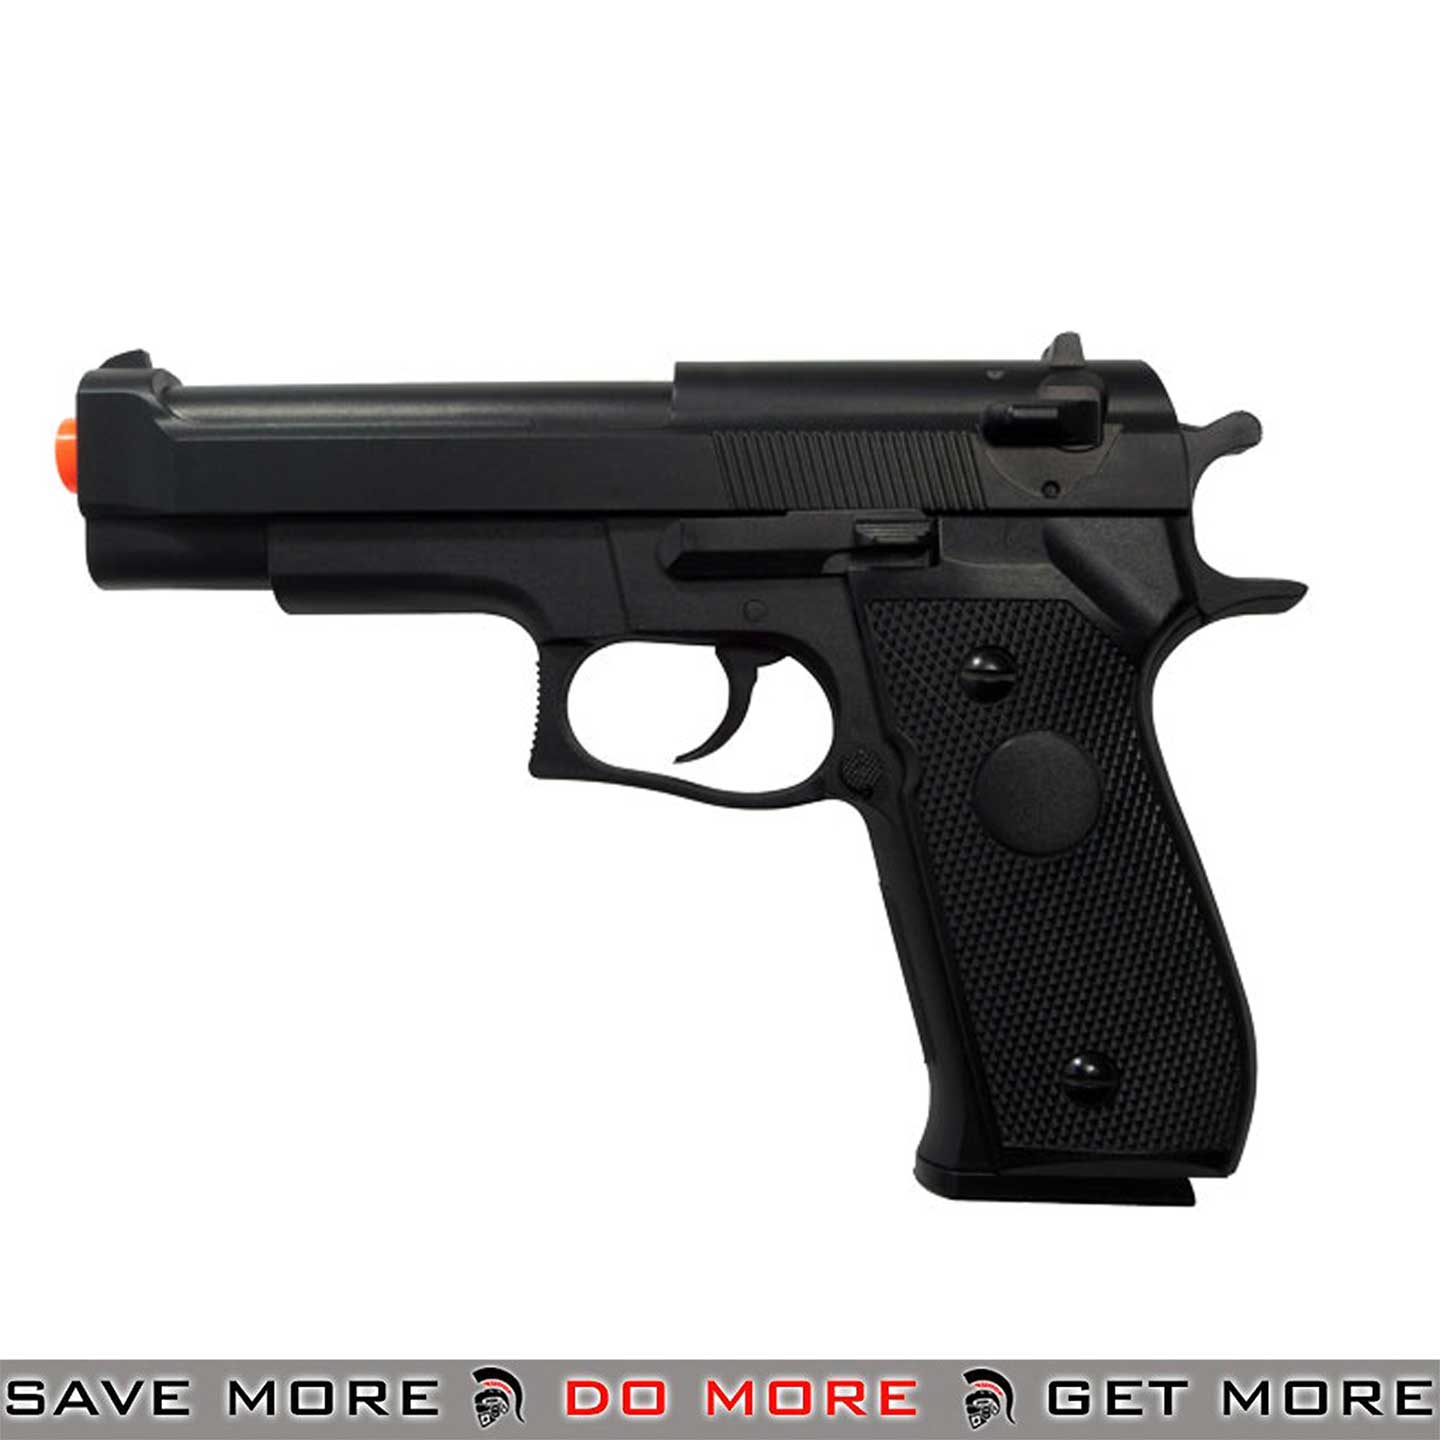 Saigo defense Glock 23 GBB Airsoft Pistol Black